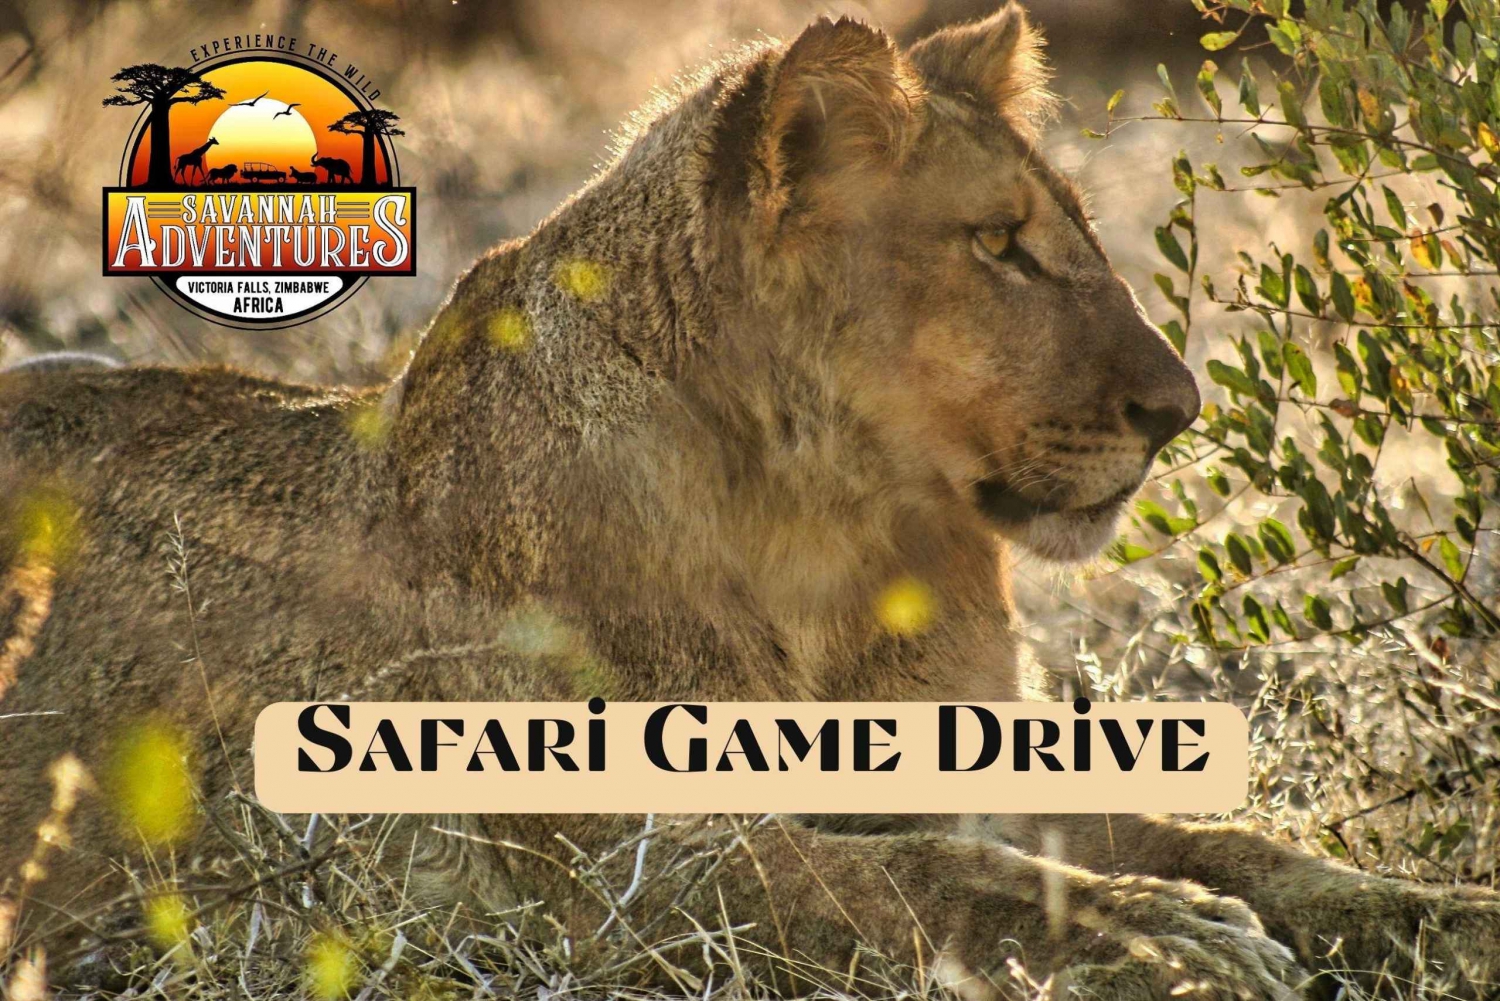 Victoria Falls: 4x4 Safari Game Drive Savannah